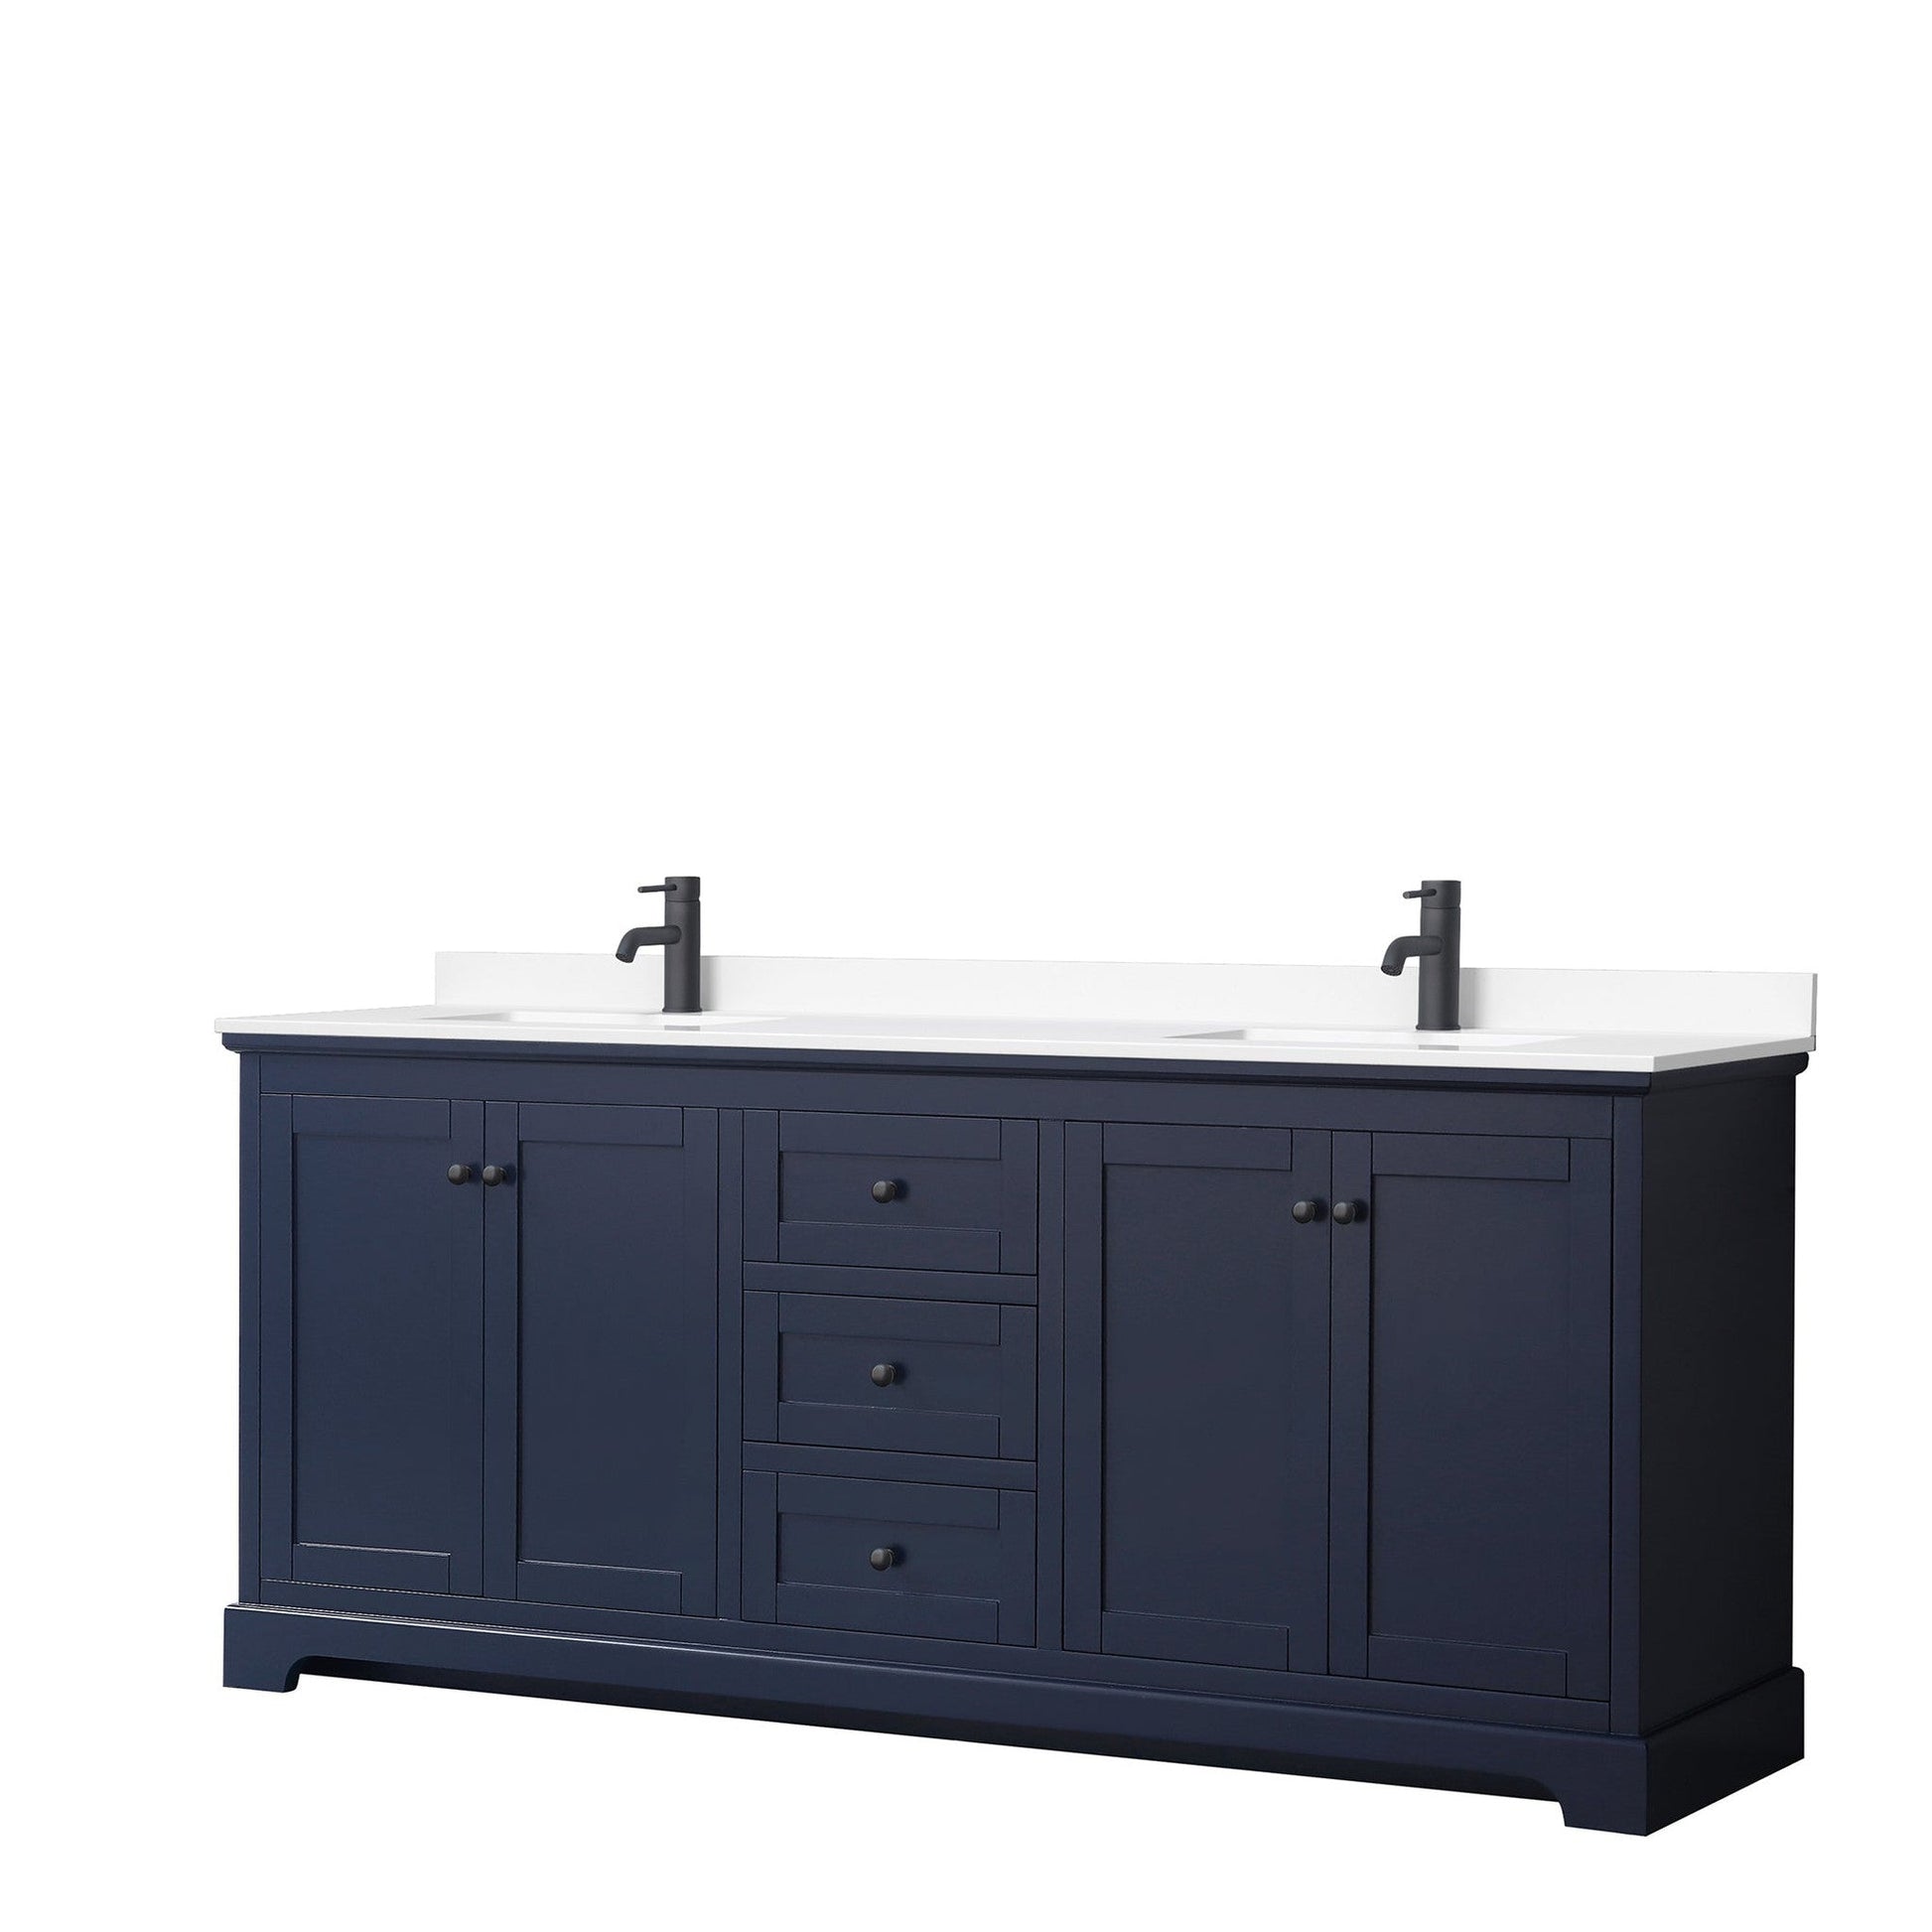 Avery 80" Double Bathroom Vanity in Dark Blue, White Cultured Marble Countertop, Undermount Square Sinks, Matte Black Trim